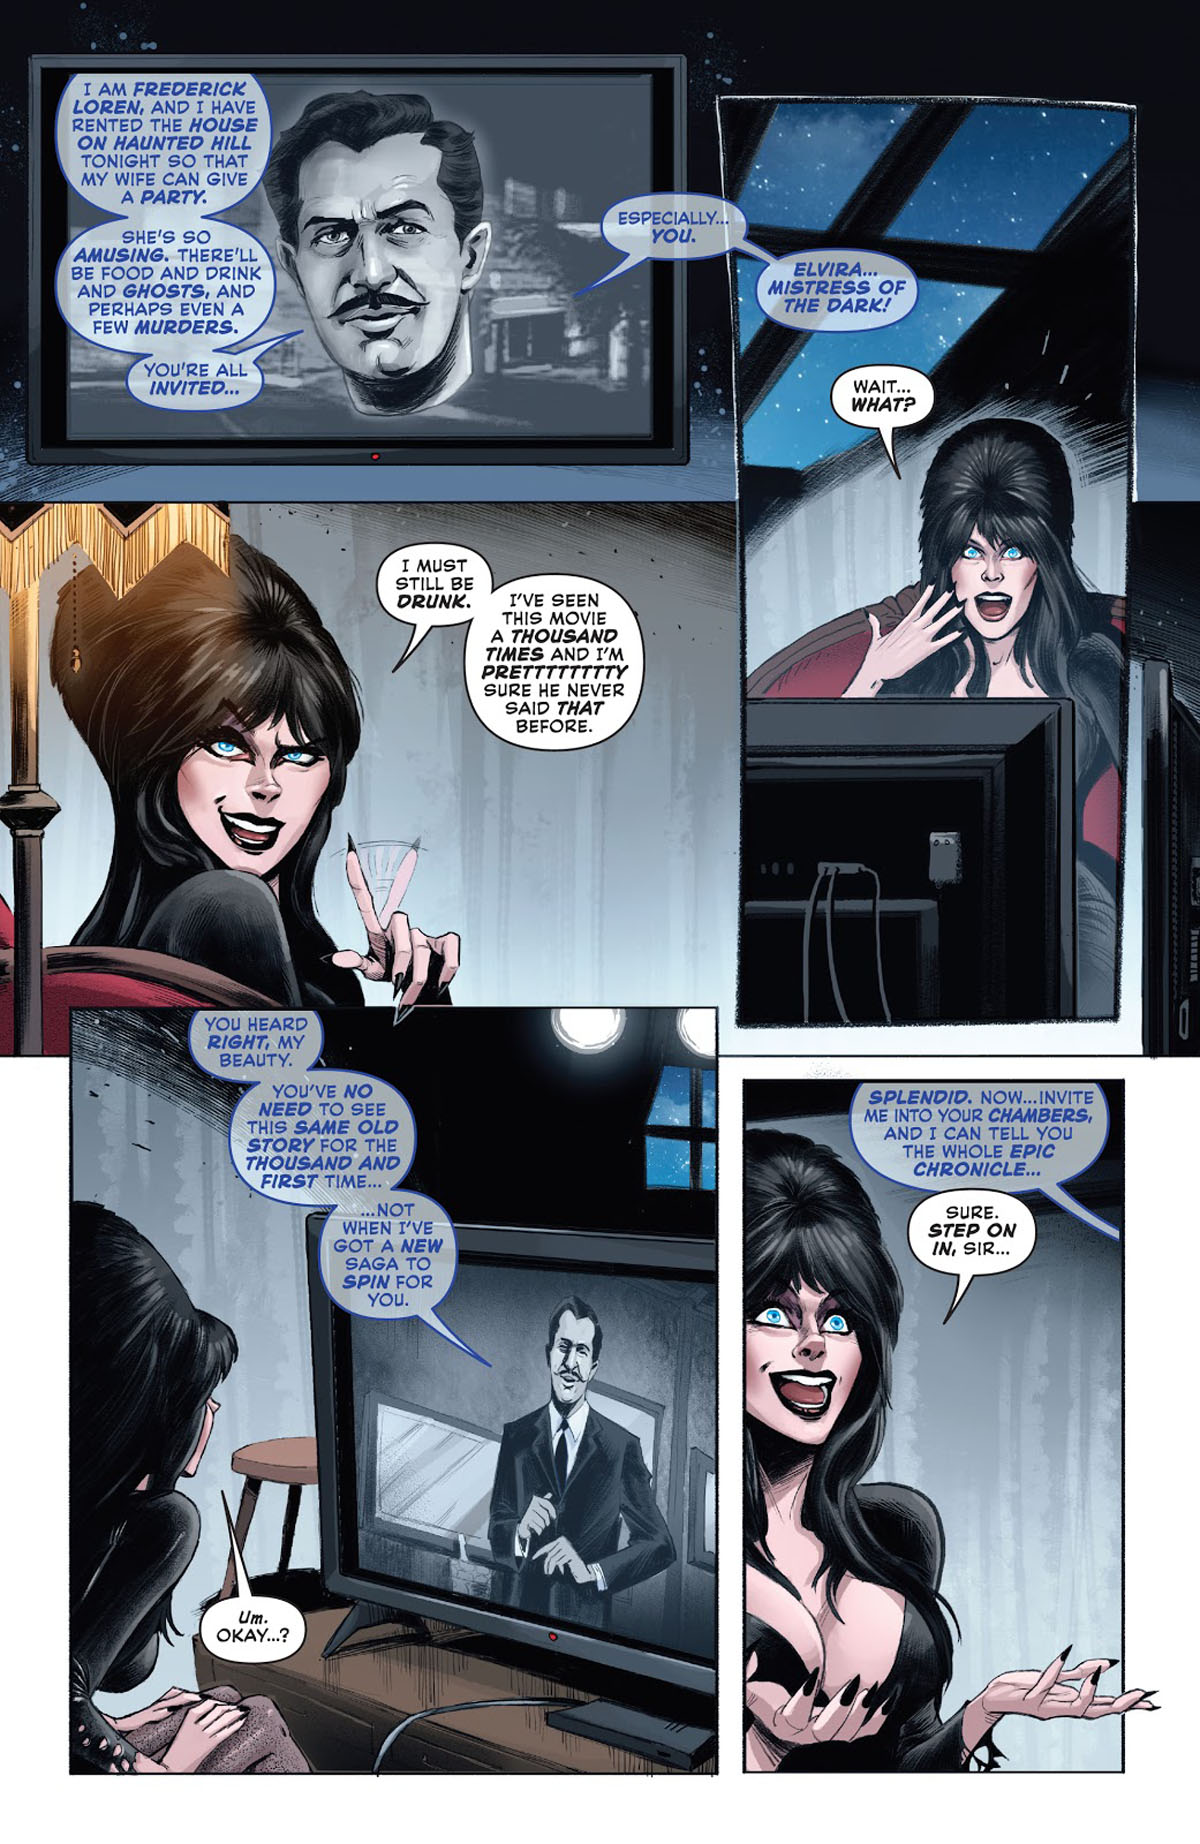 Elvira Meets Vincent Price #1 page 11 by Juan Samu